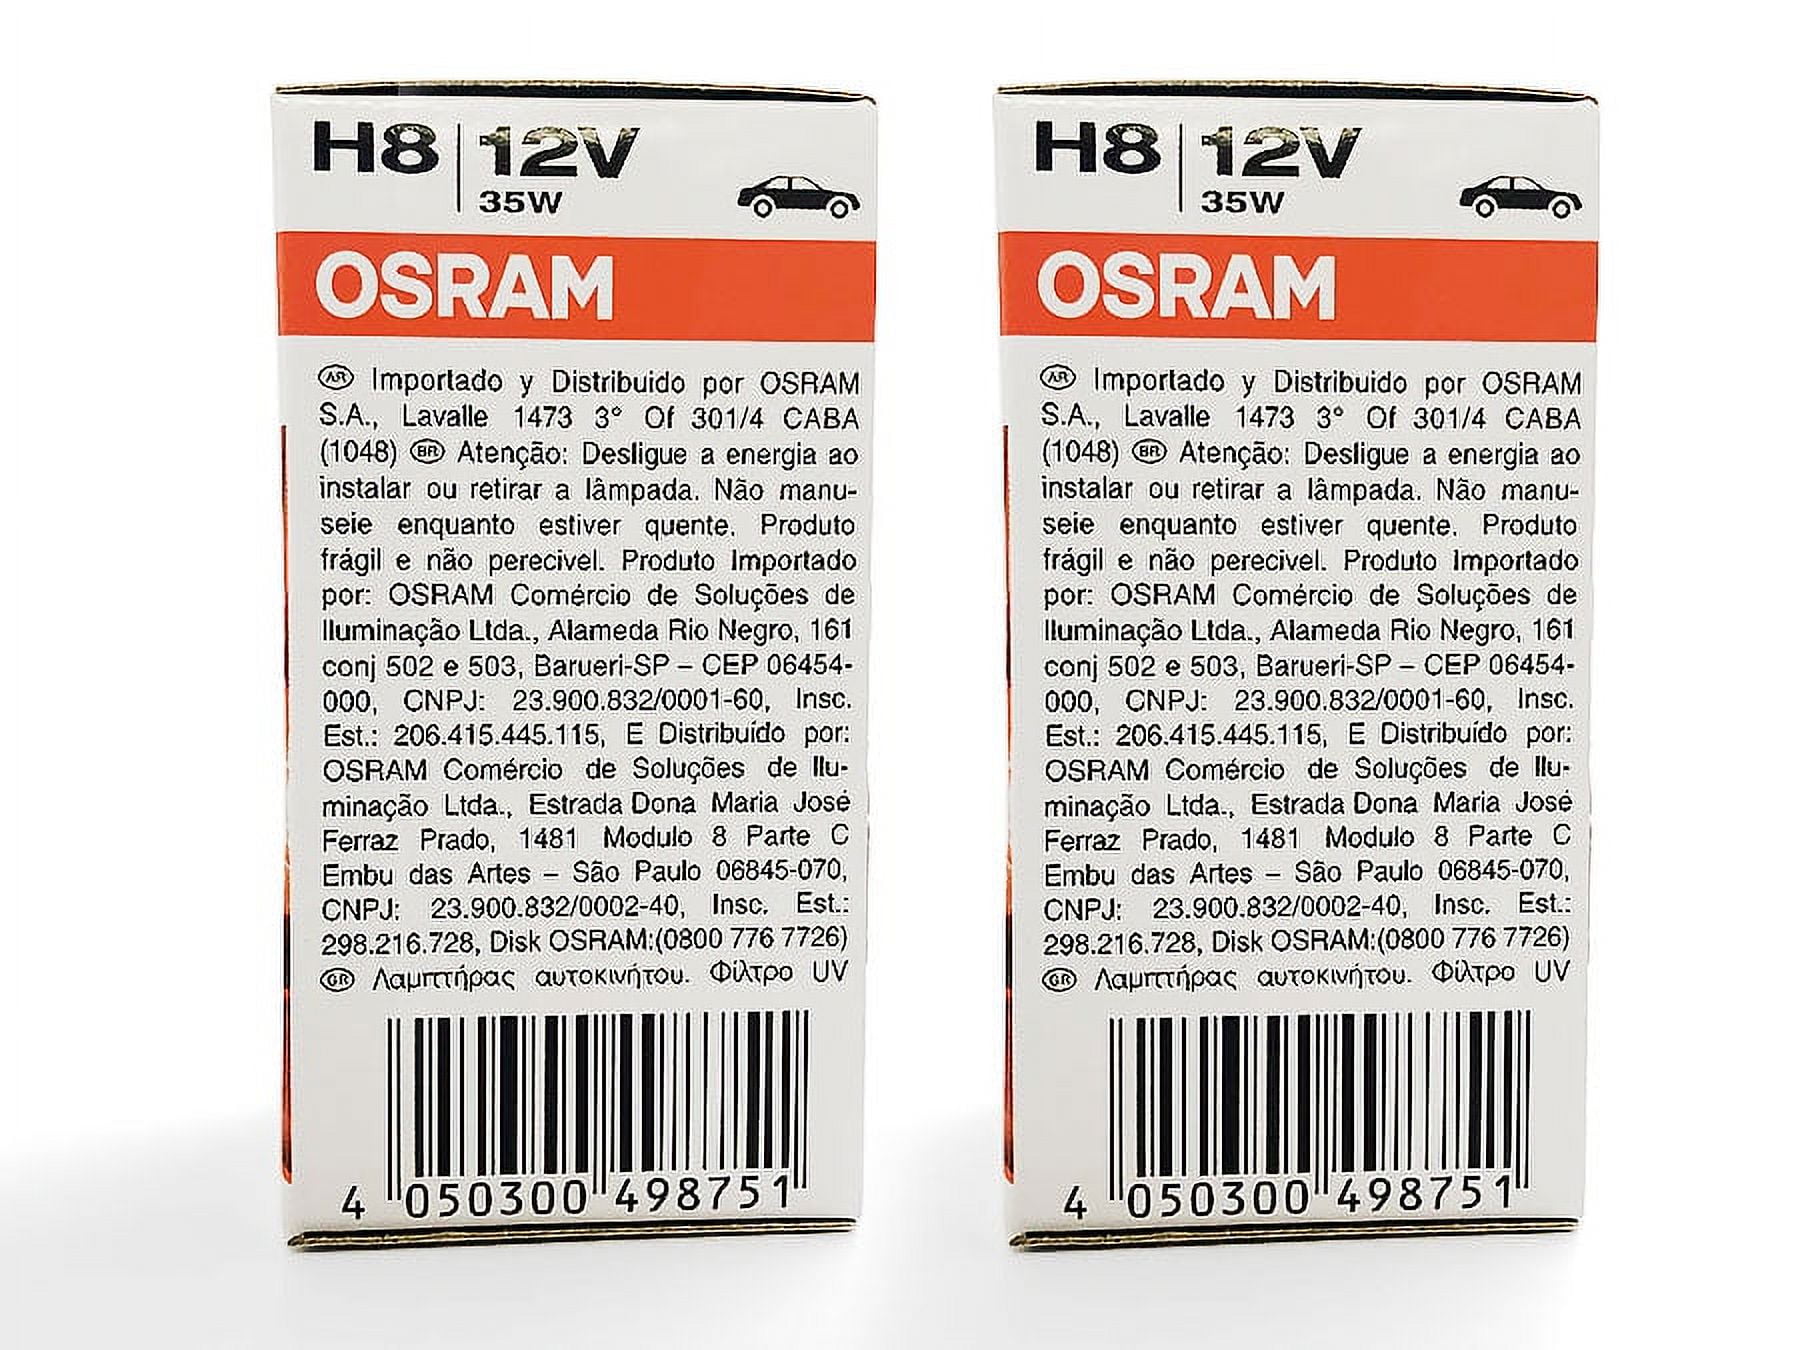 OSRAM Halogenlampe H8 ORIGINAL LINE 12V 35W PGJ19-1 64212